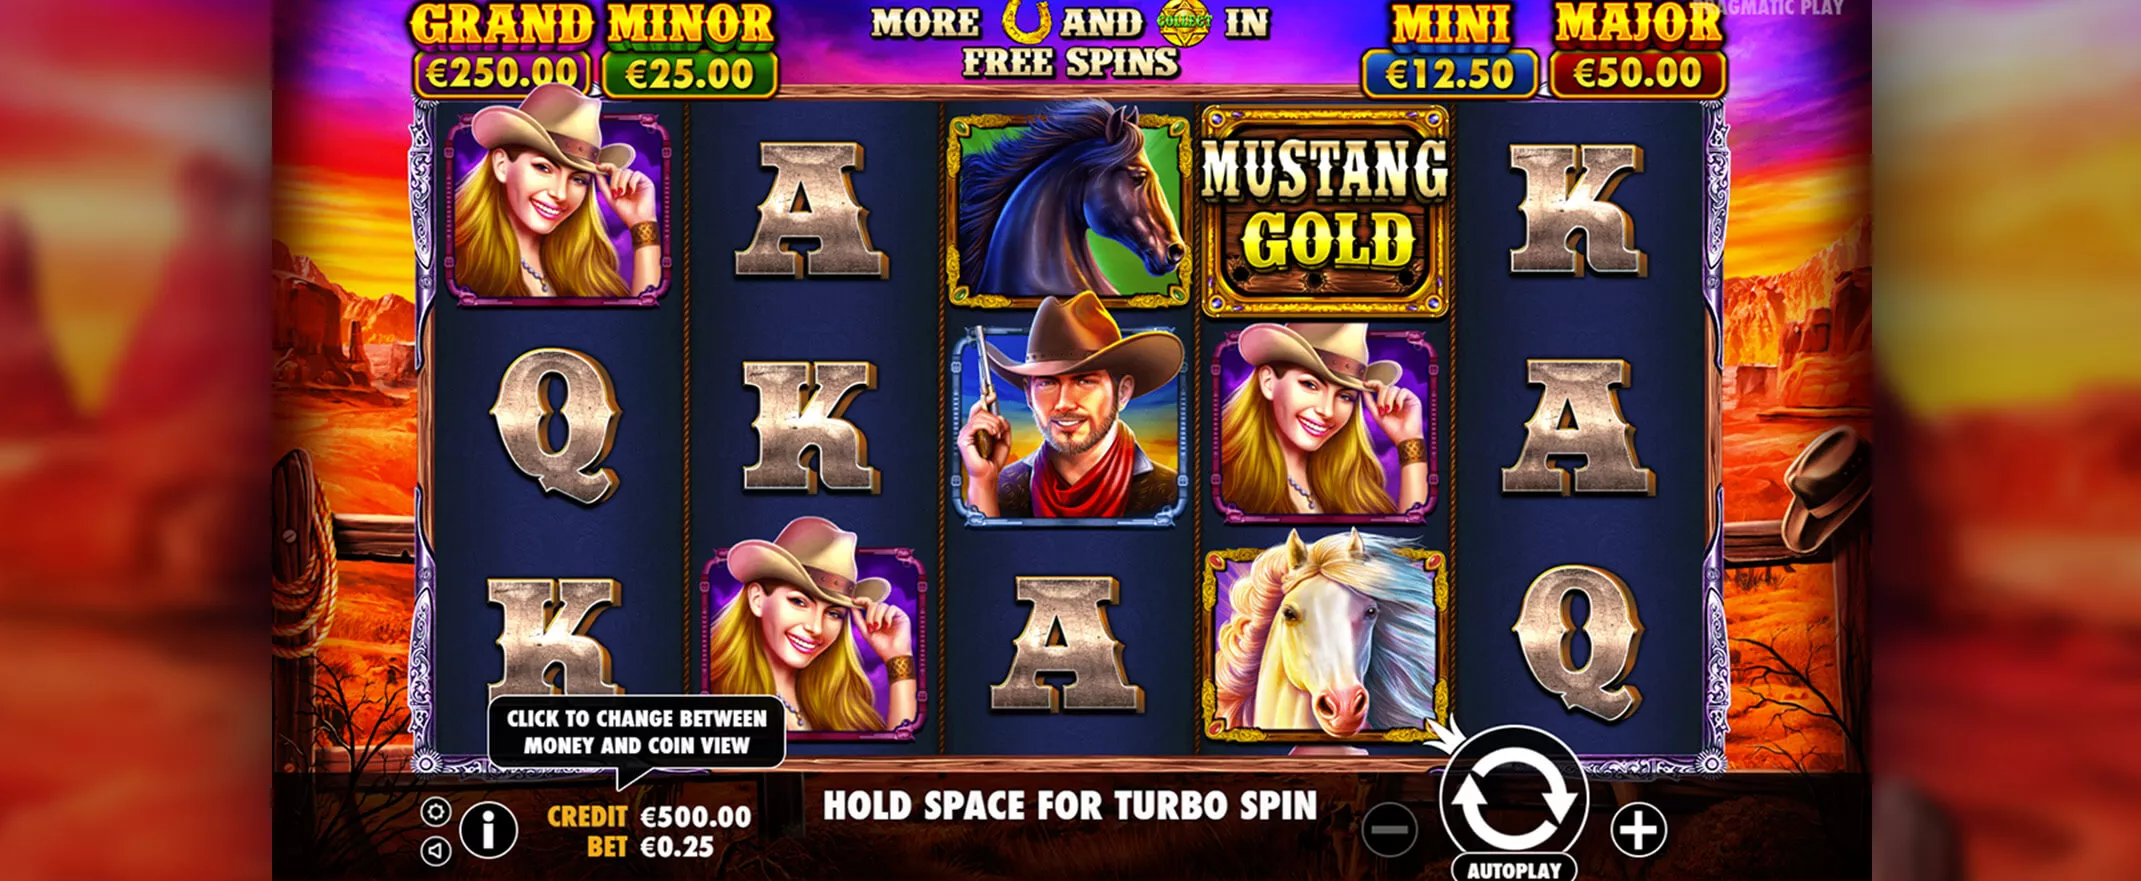 Mustang Gold slot screenshot